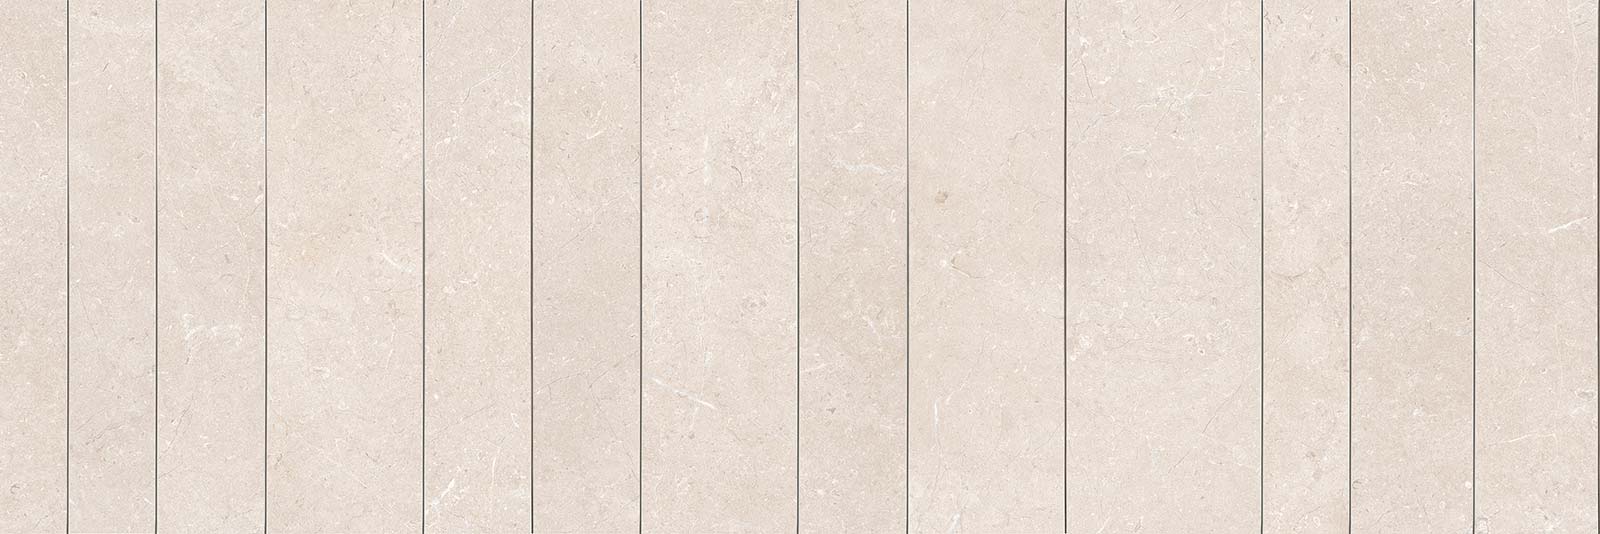 Wandfliese Marazzi Magnifica Limestone Sand Naturale – Matt Limestone Sand M8FP matt natur 60x180cm Mosaik Strip Inserto Metall 7mm